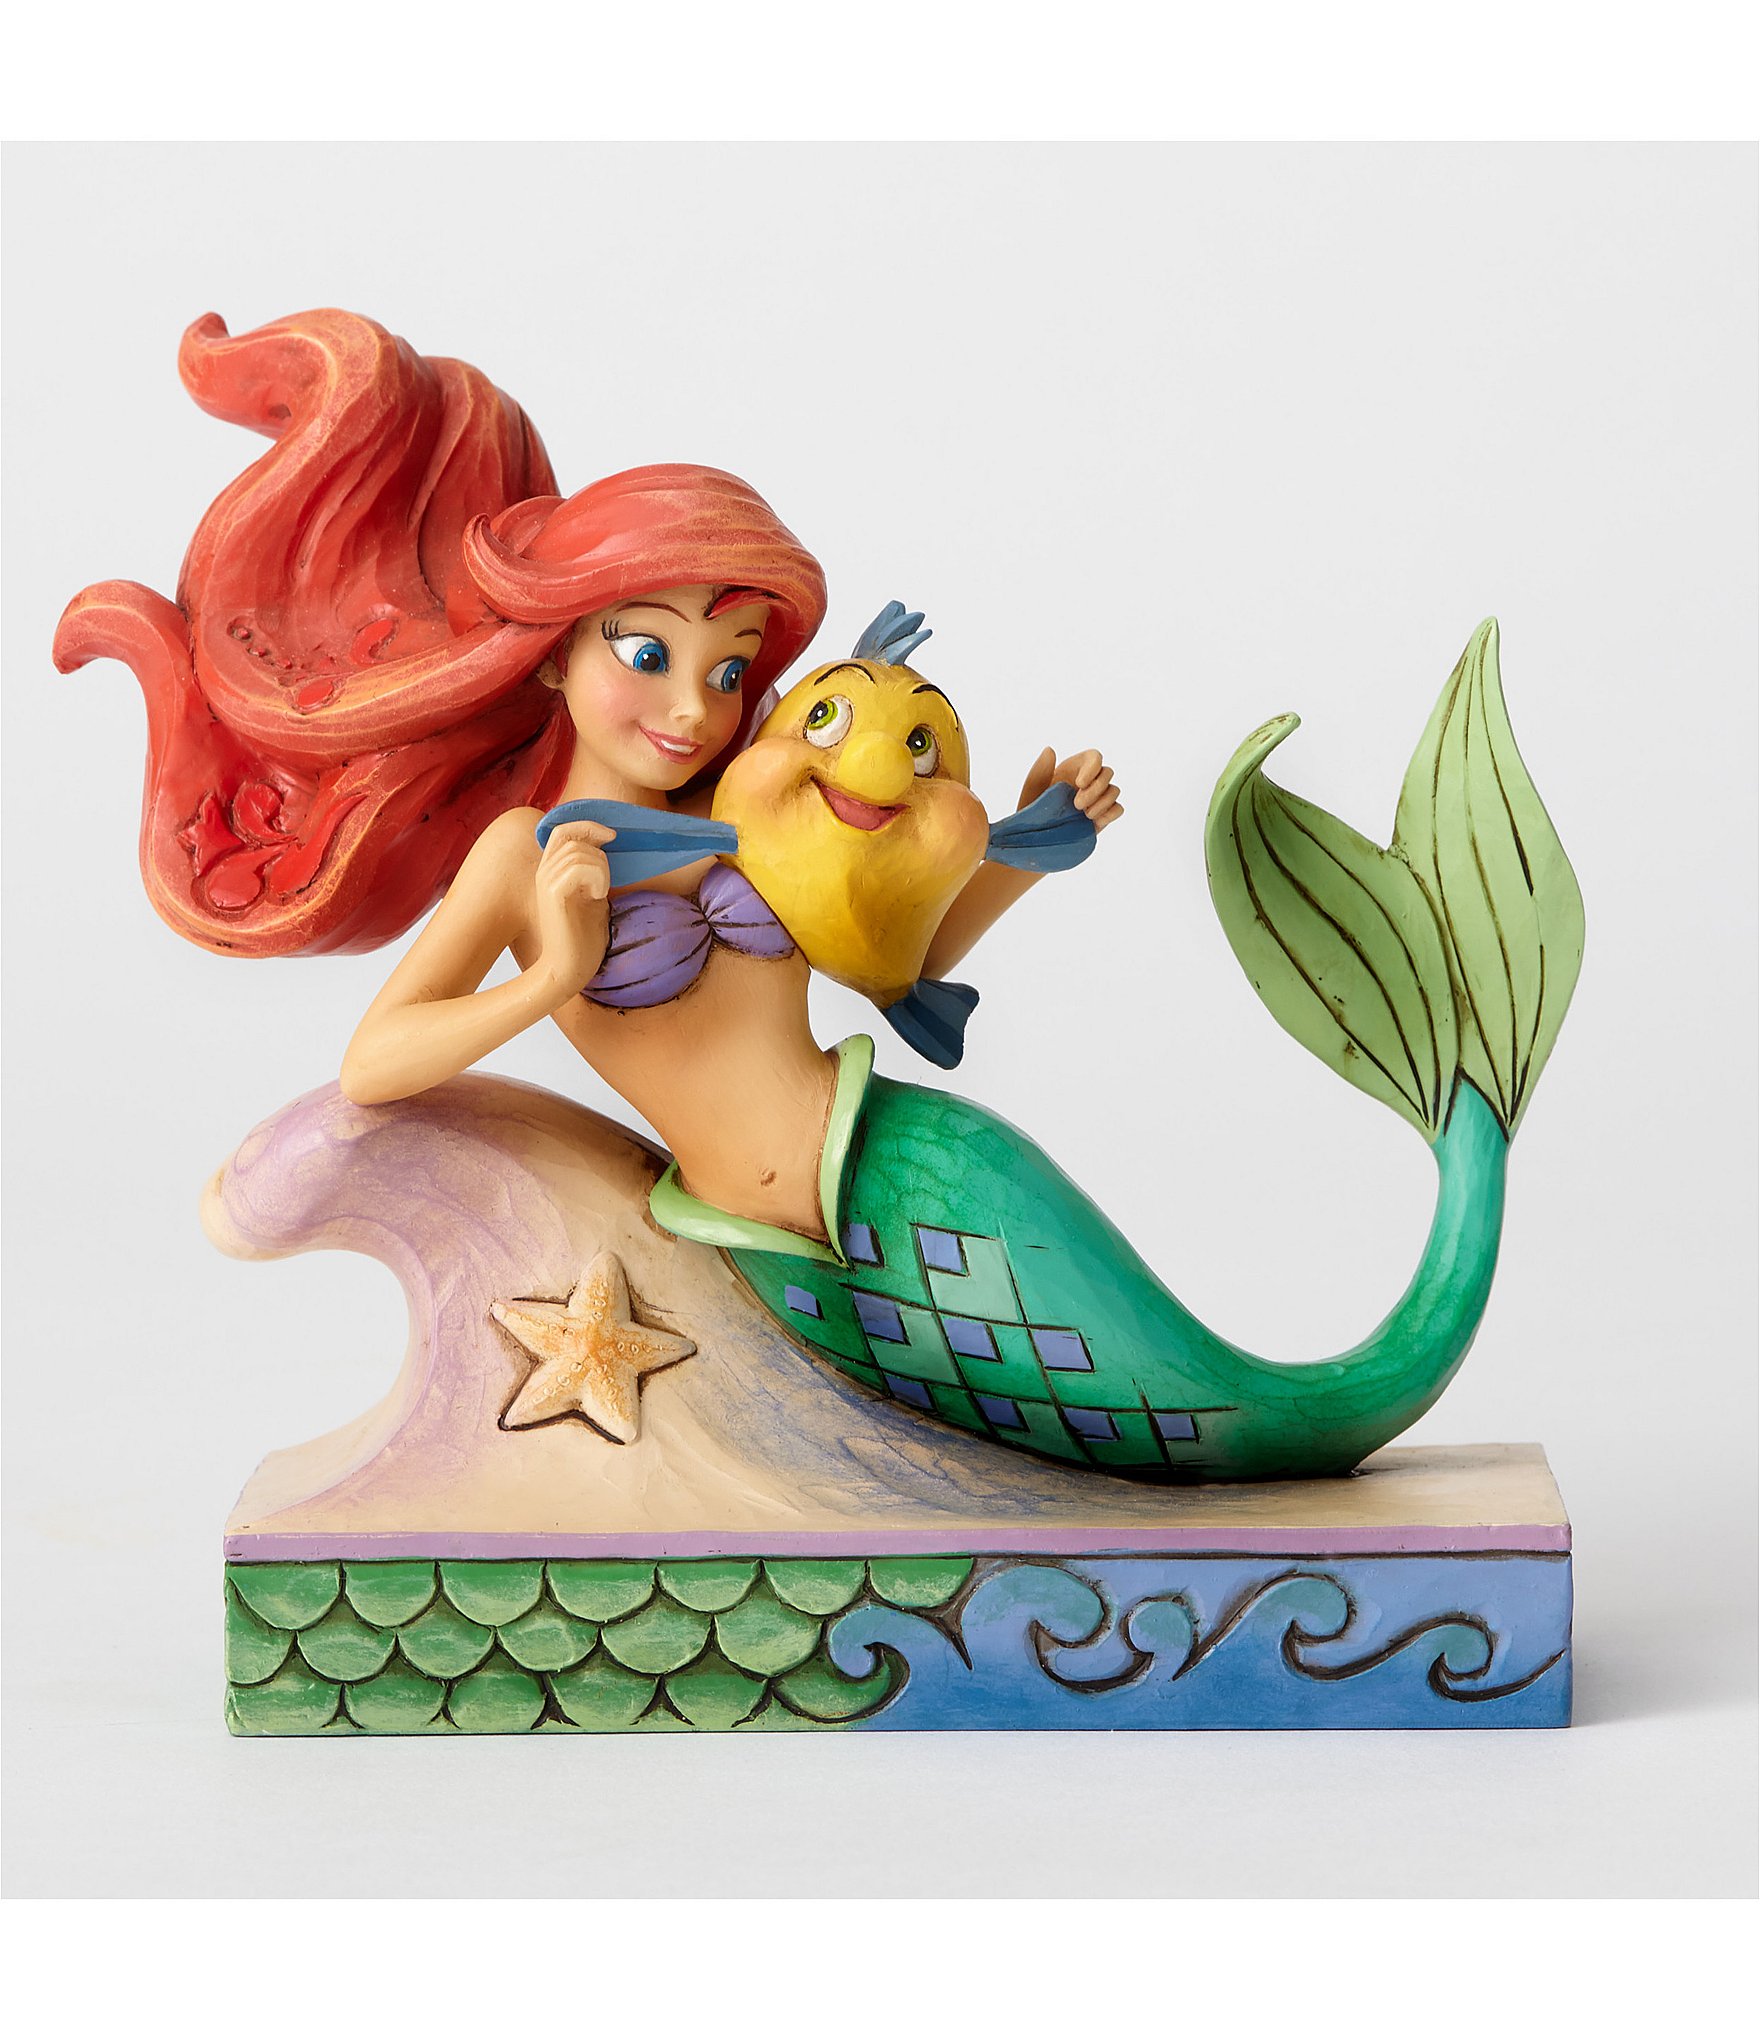 Enesco Disney Traditions Ariel Mermaid By Moonlight Figurine NEW IN STOCK 